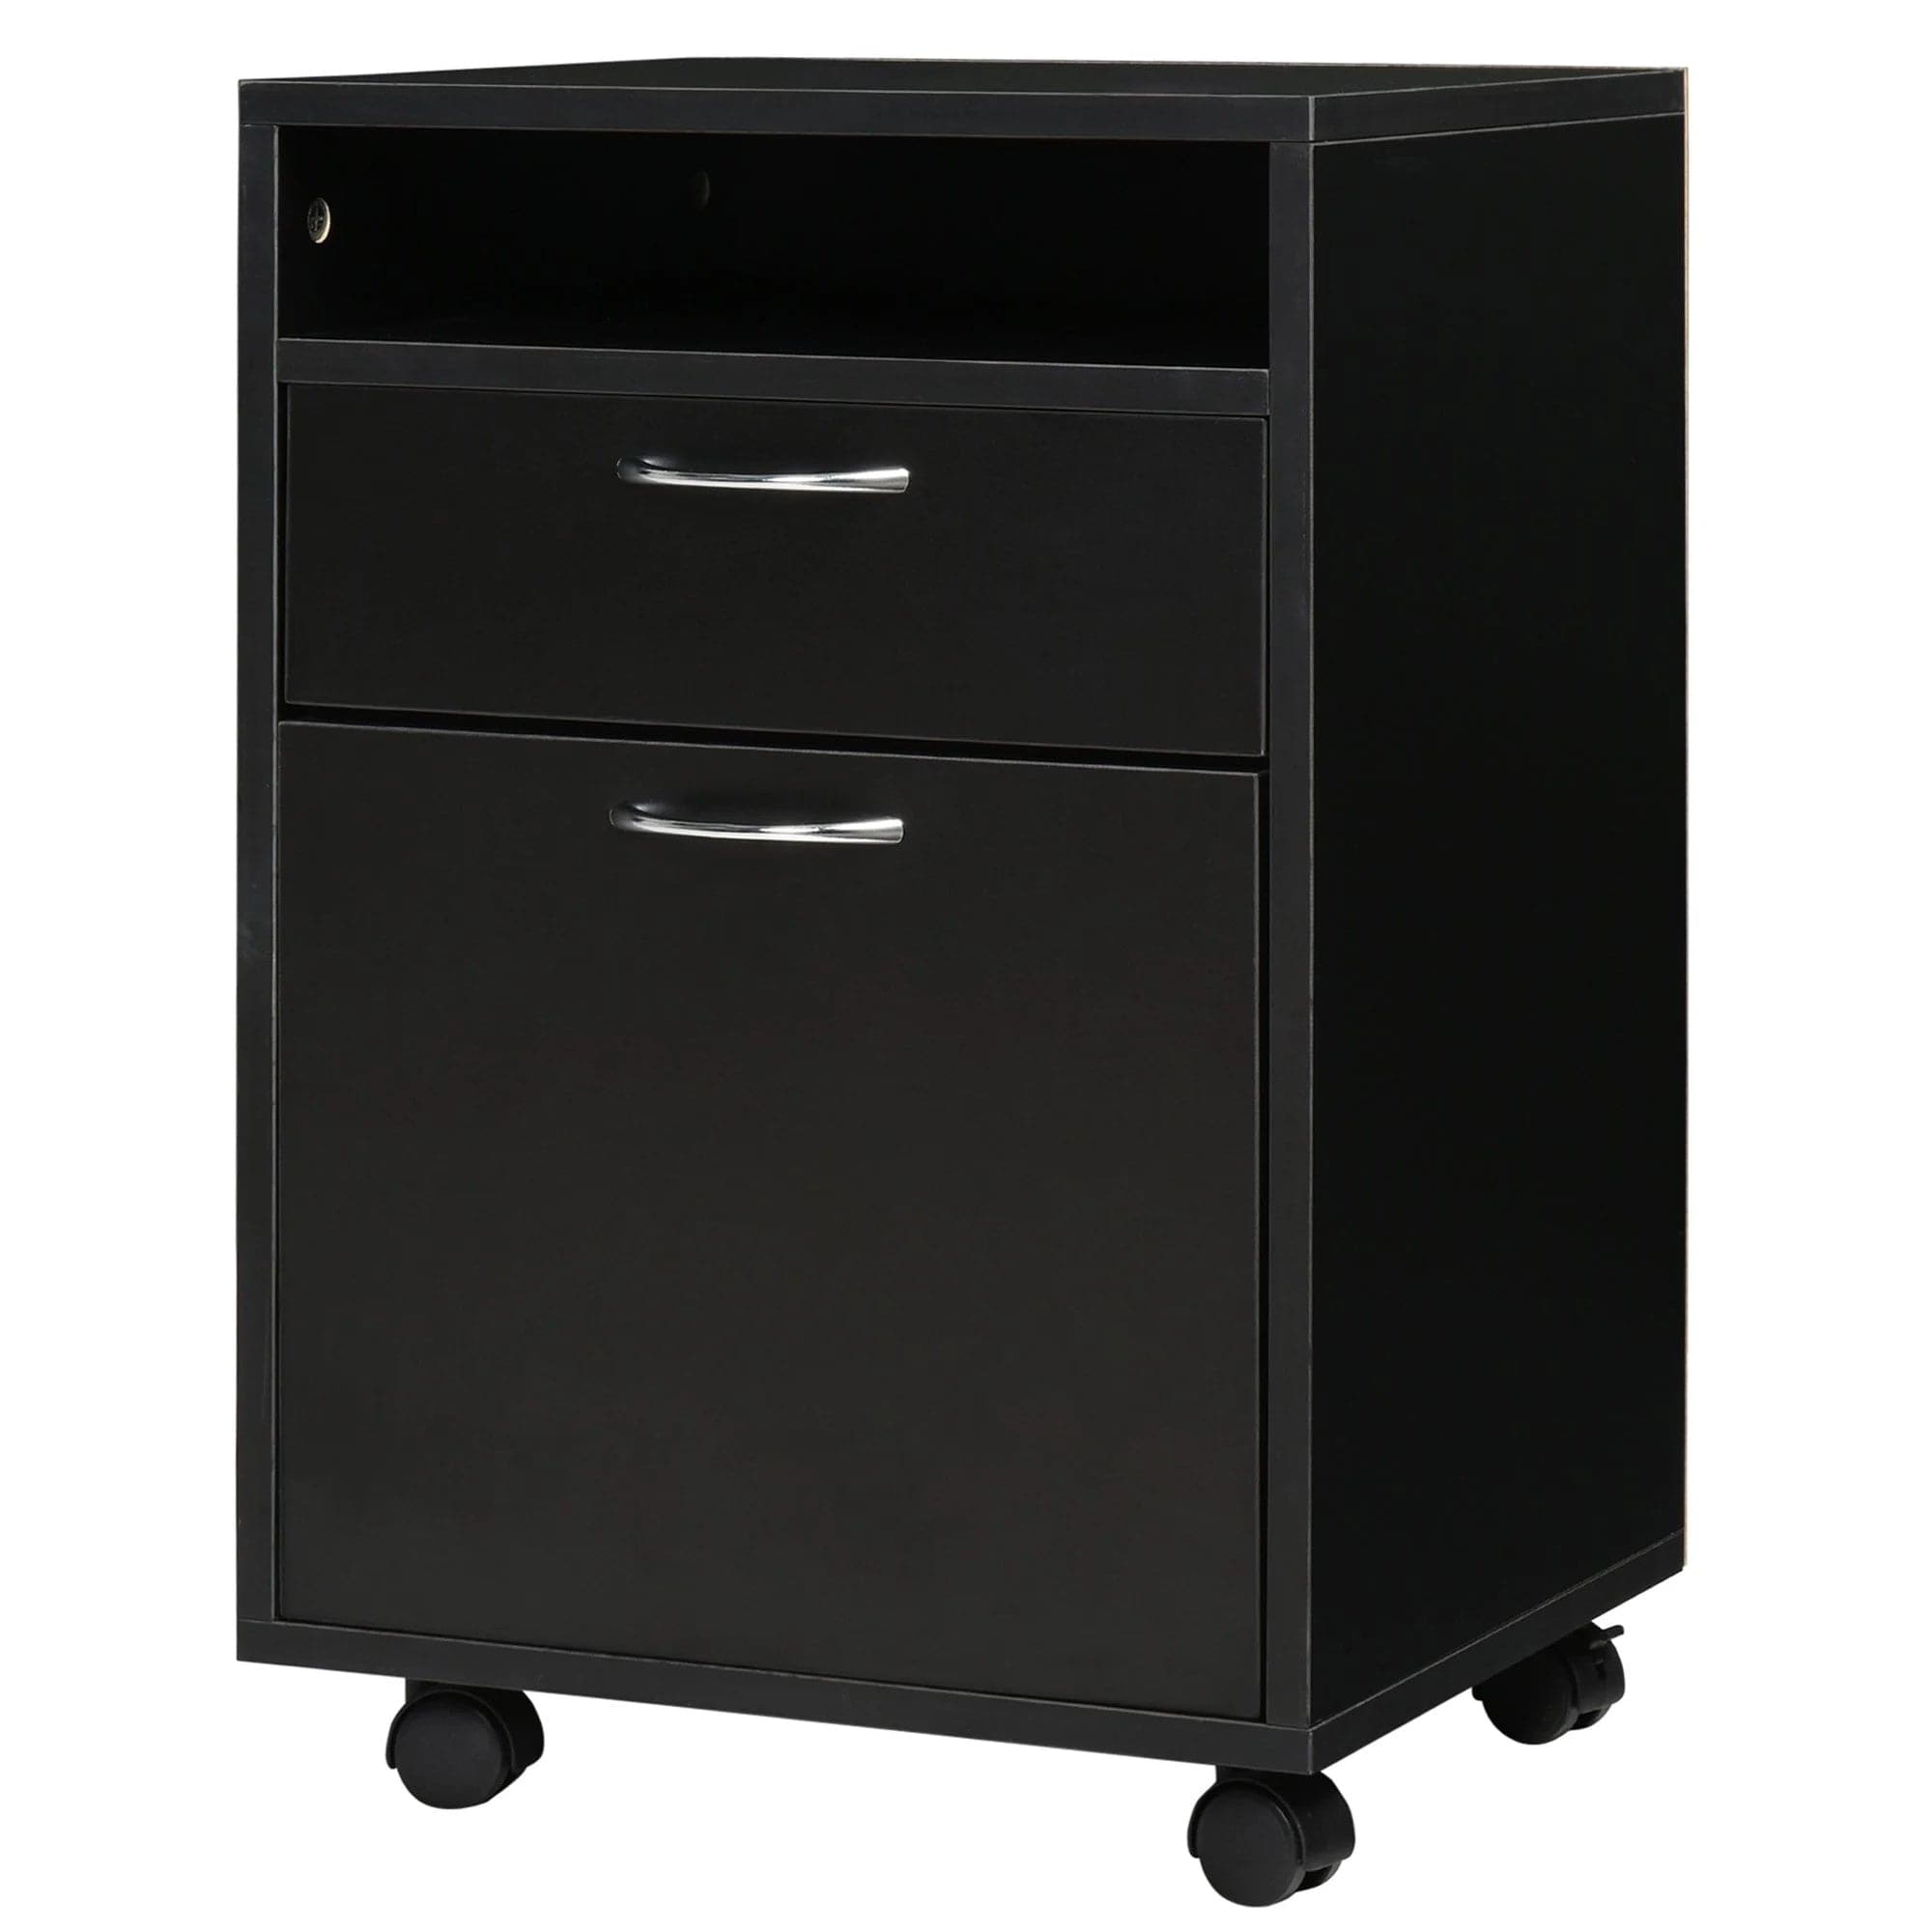 ProperAV Extra 60cm 2-Drawer Office Home Storage Cabinet (Black)